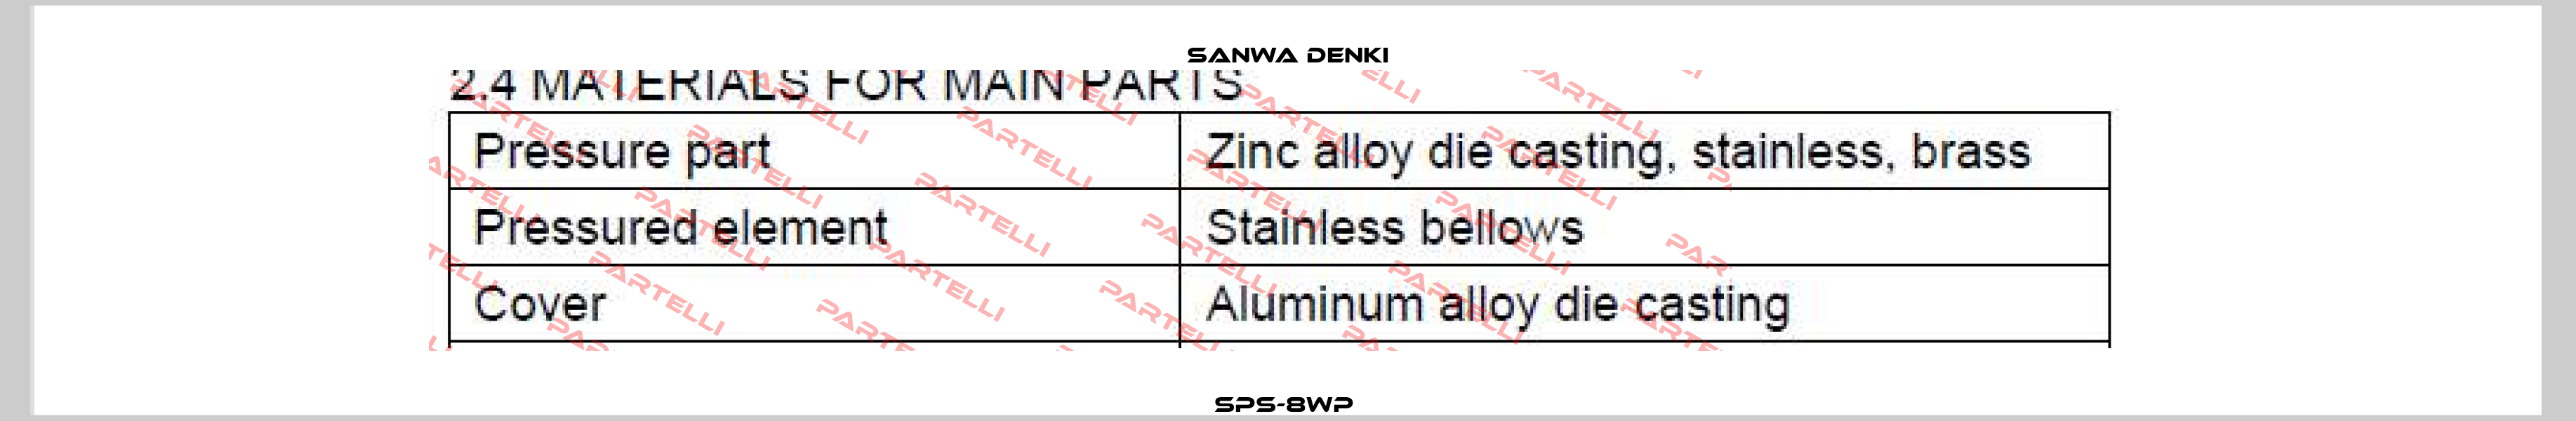 SPS-8WP  Sanwa Denki